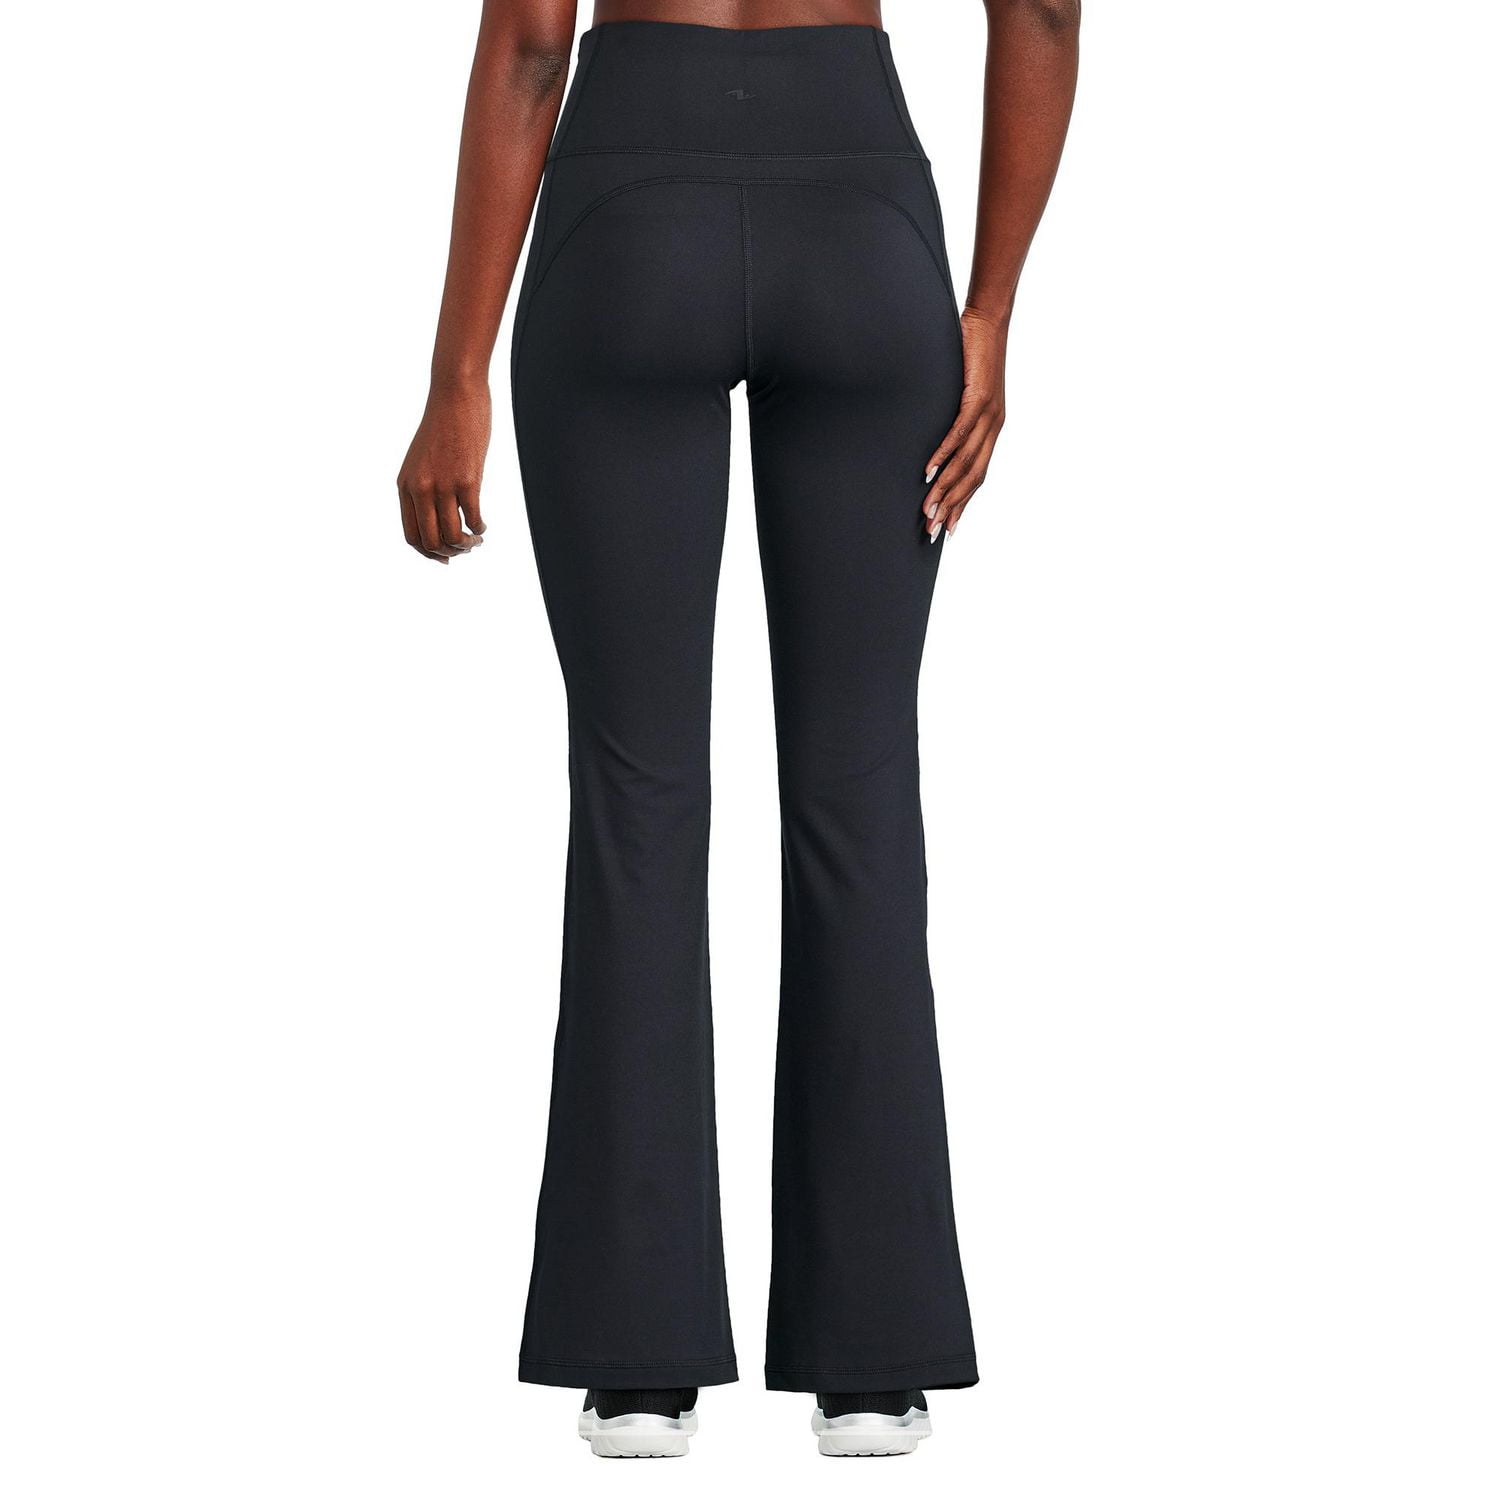 Athletic Works Women's Interlock knit Core Yoga Pant Black, Sizes